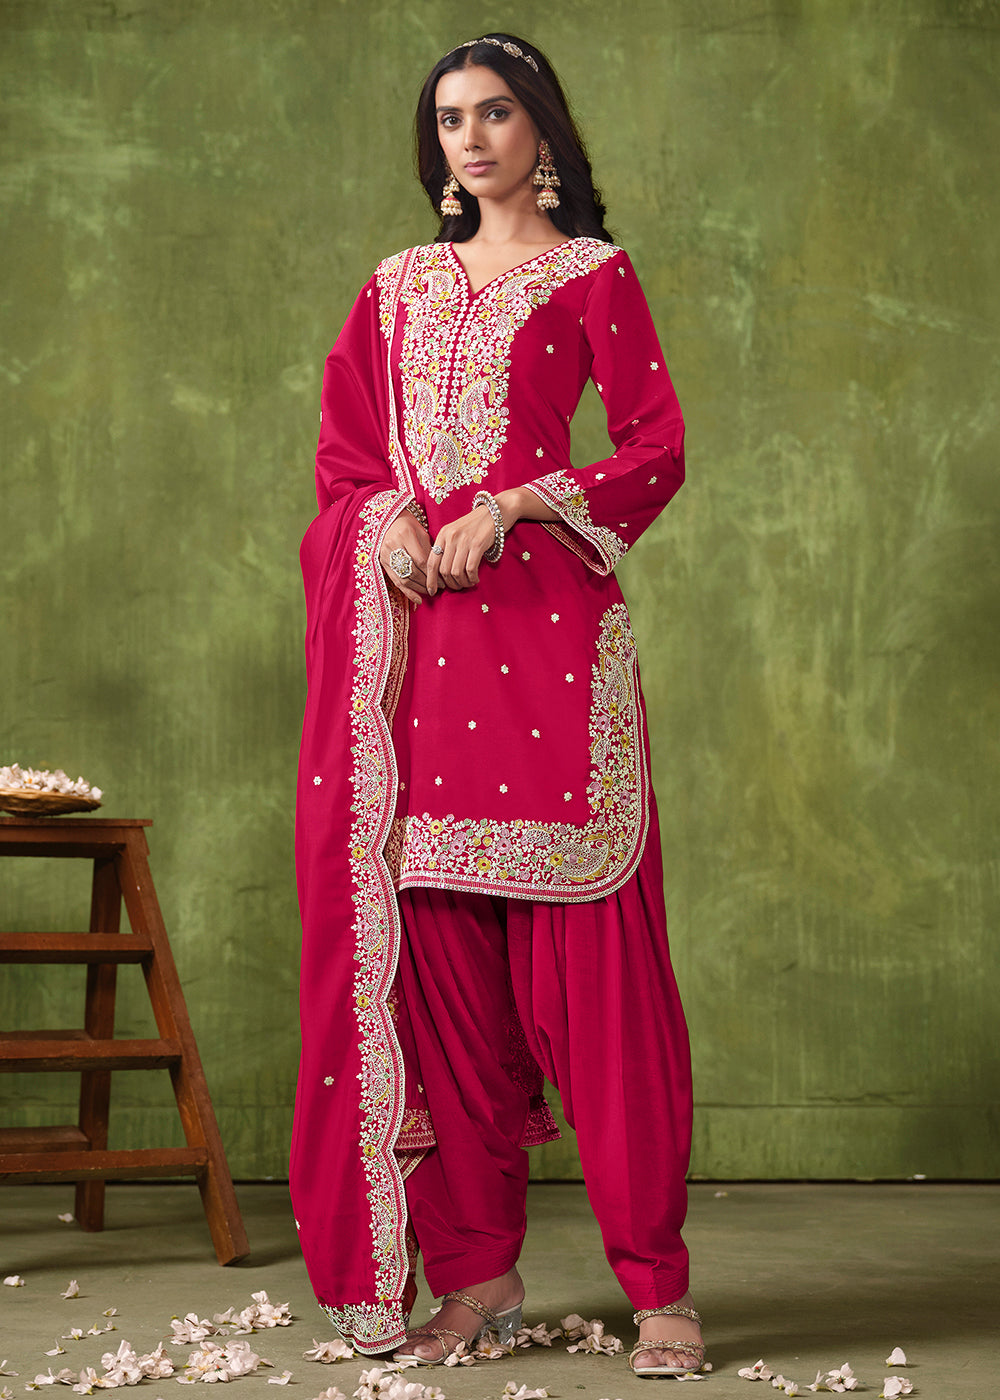 Buy Now Patiala Style Rani Pink Chanderi Silk Punjabi Salwar Suit Online in USA, UK, Canada, Germany, Australia & Worldwide at Empress Clothing.